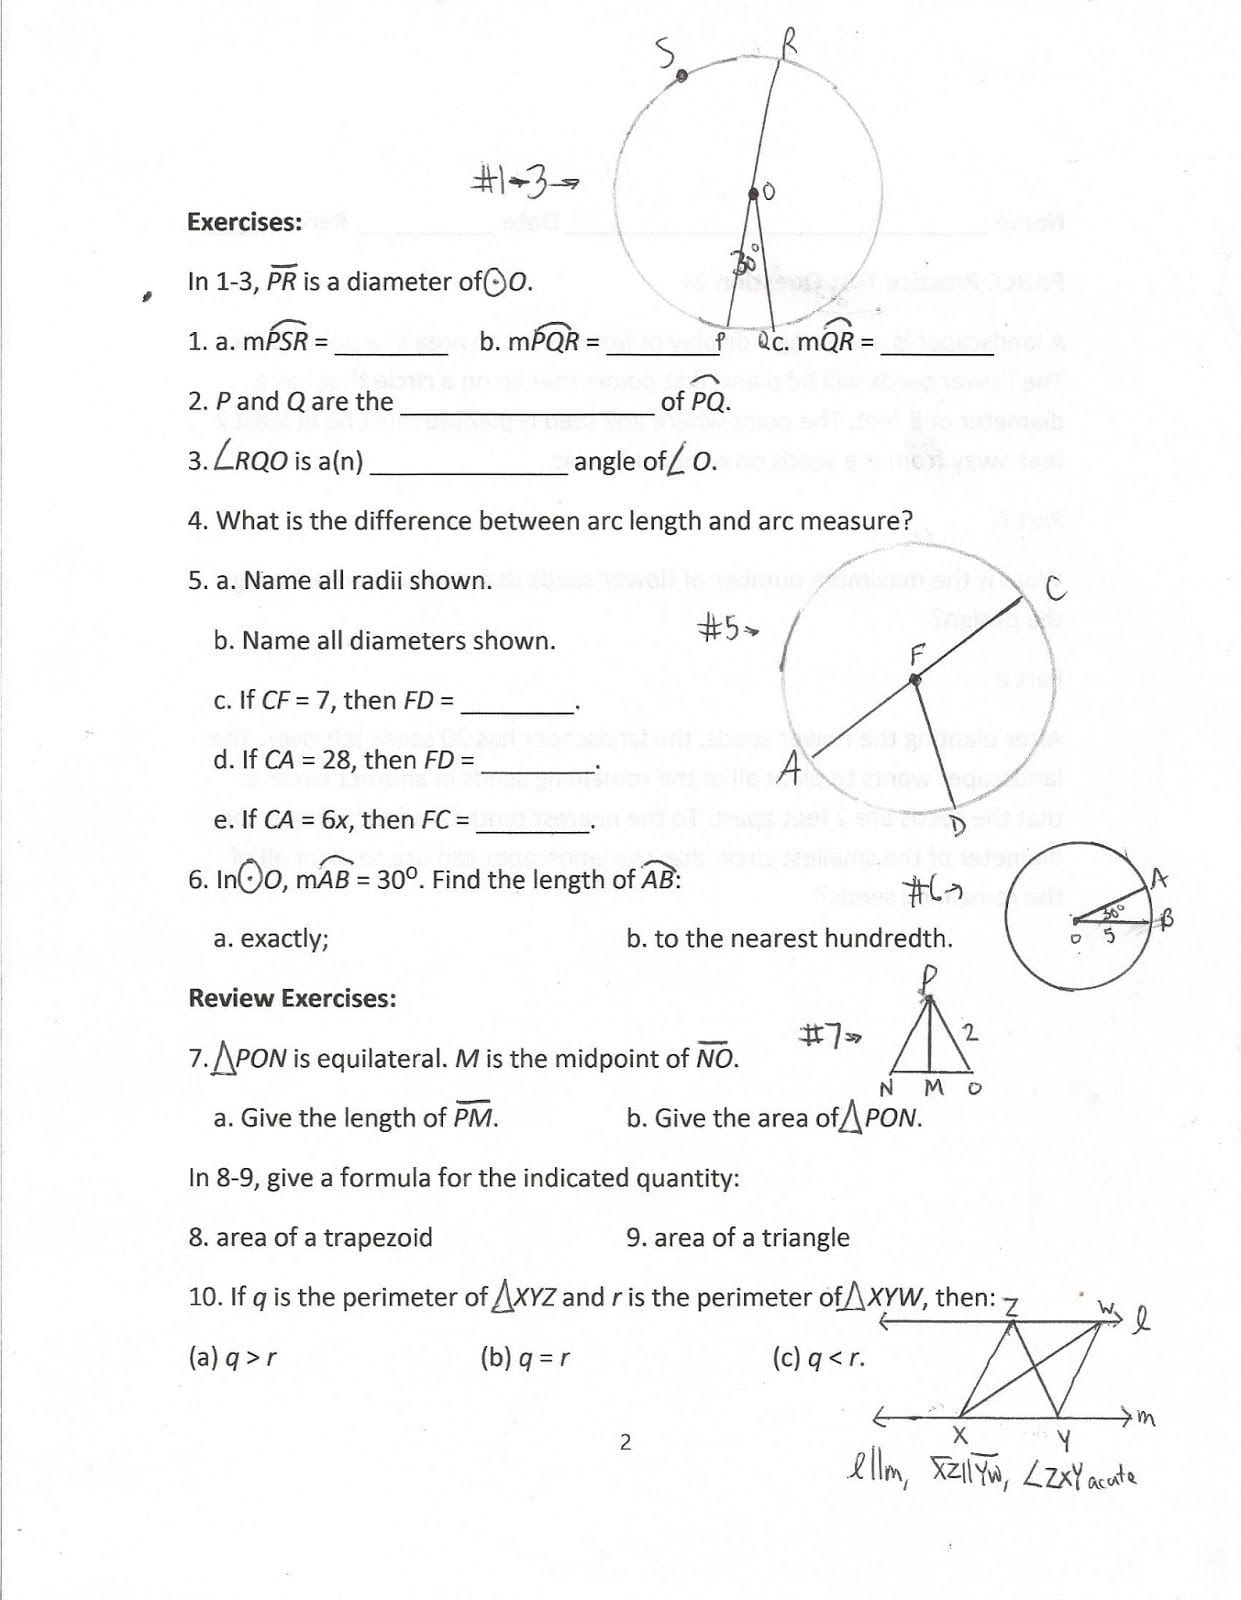 algebra-1-worksheet-15-translating-expressions-answer-key-db-excel